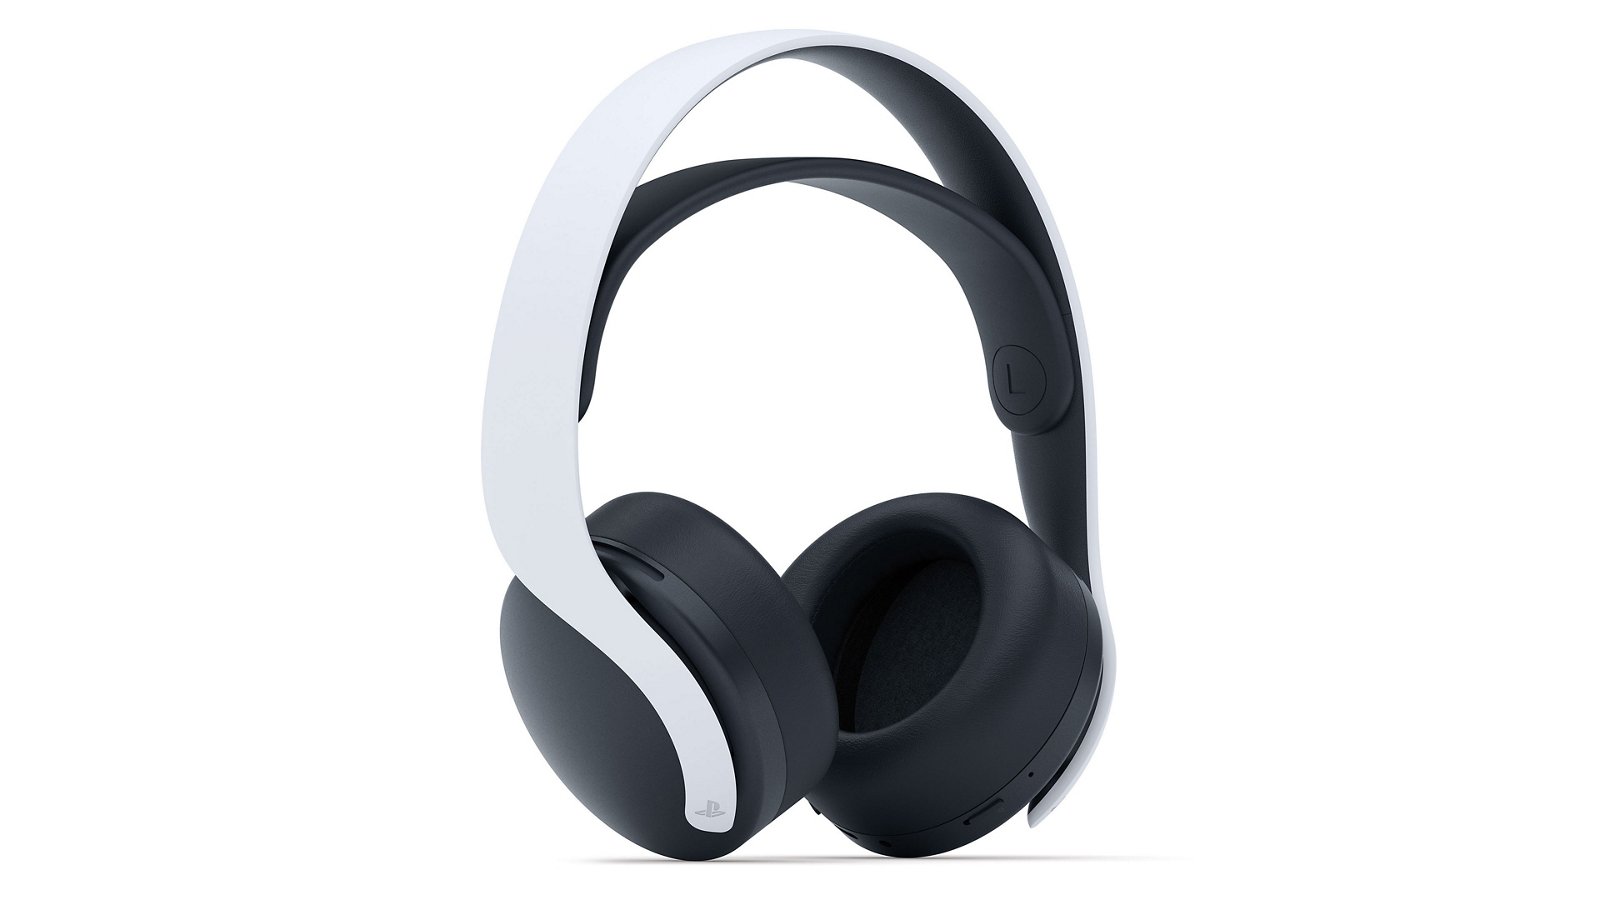 Set kepala PS5 Pulse 3D Sony white Black Friday 2021 UK tawaran jualan